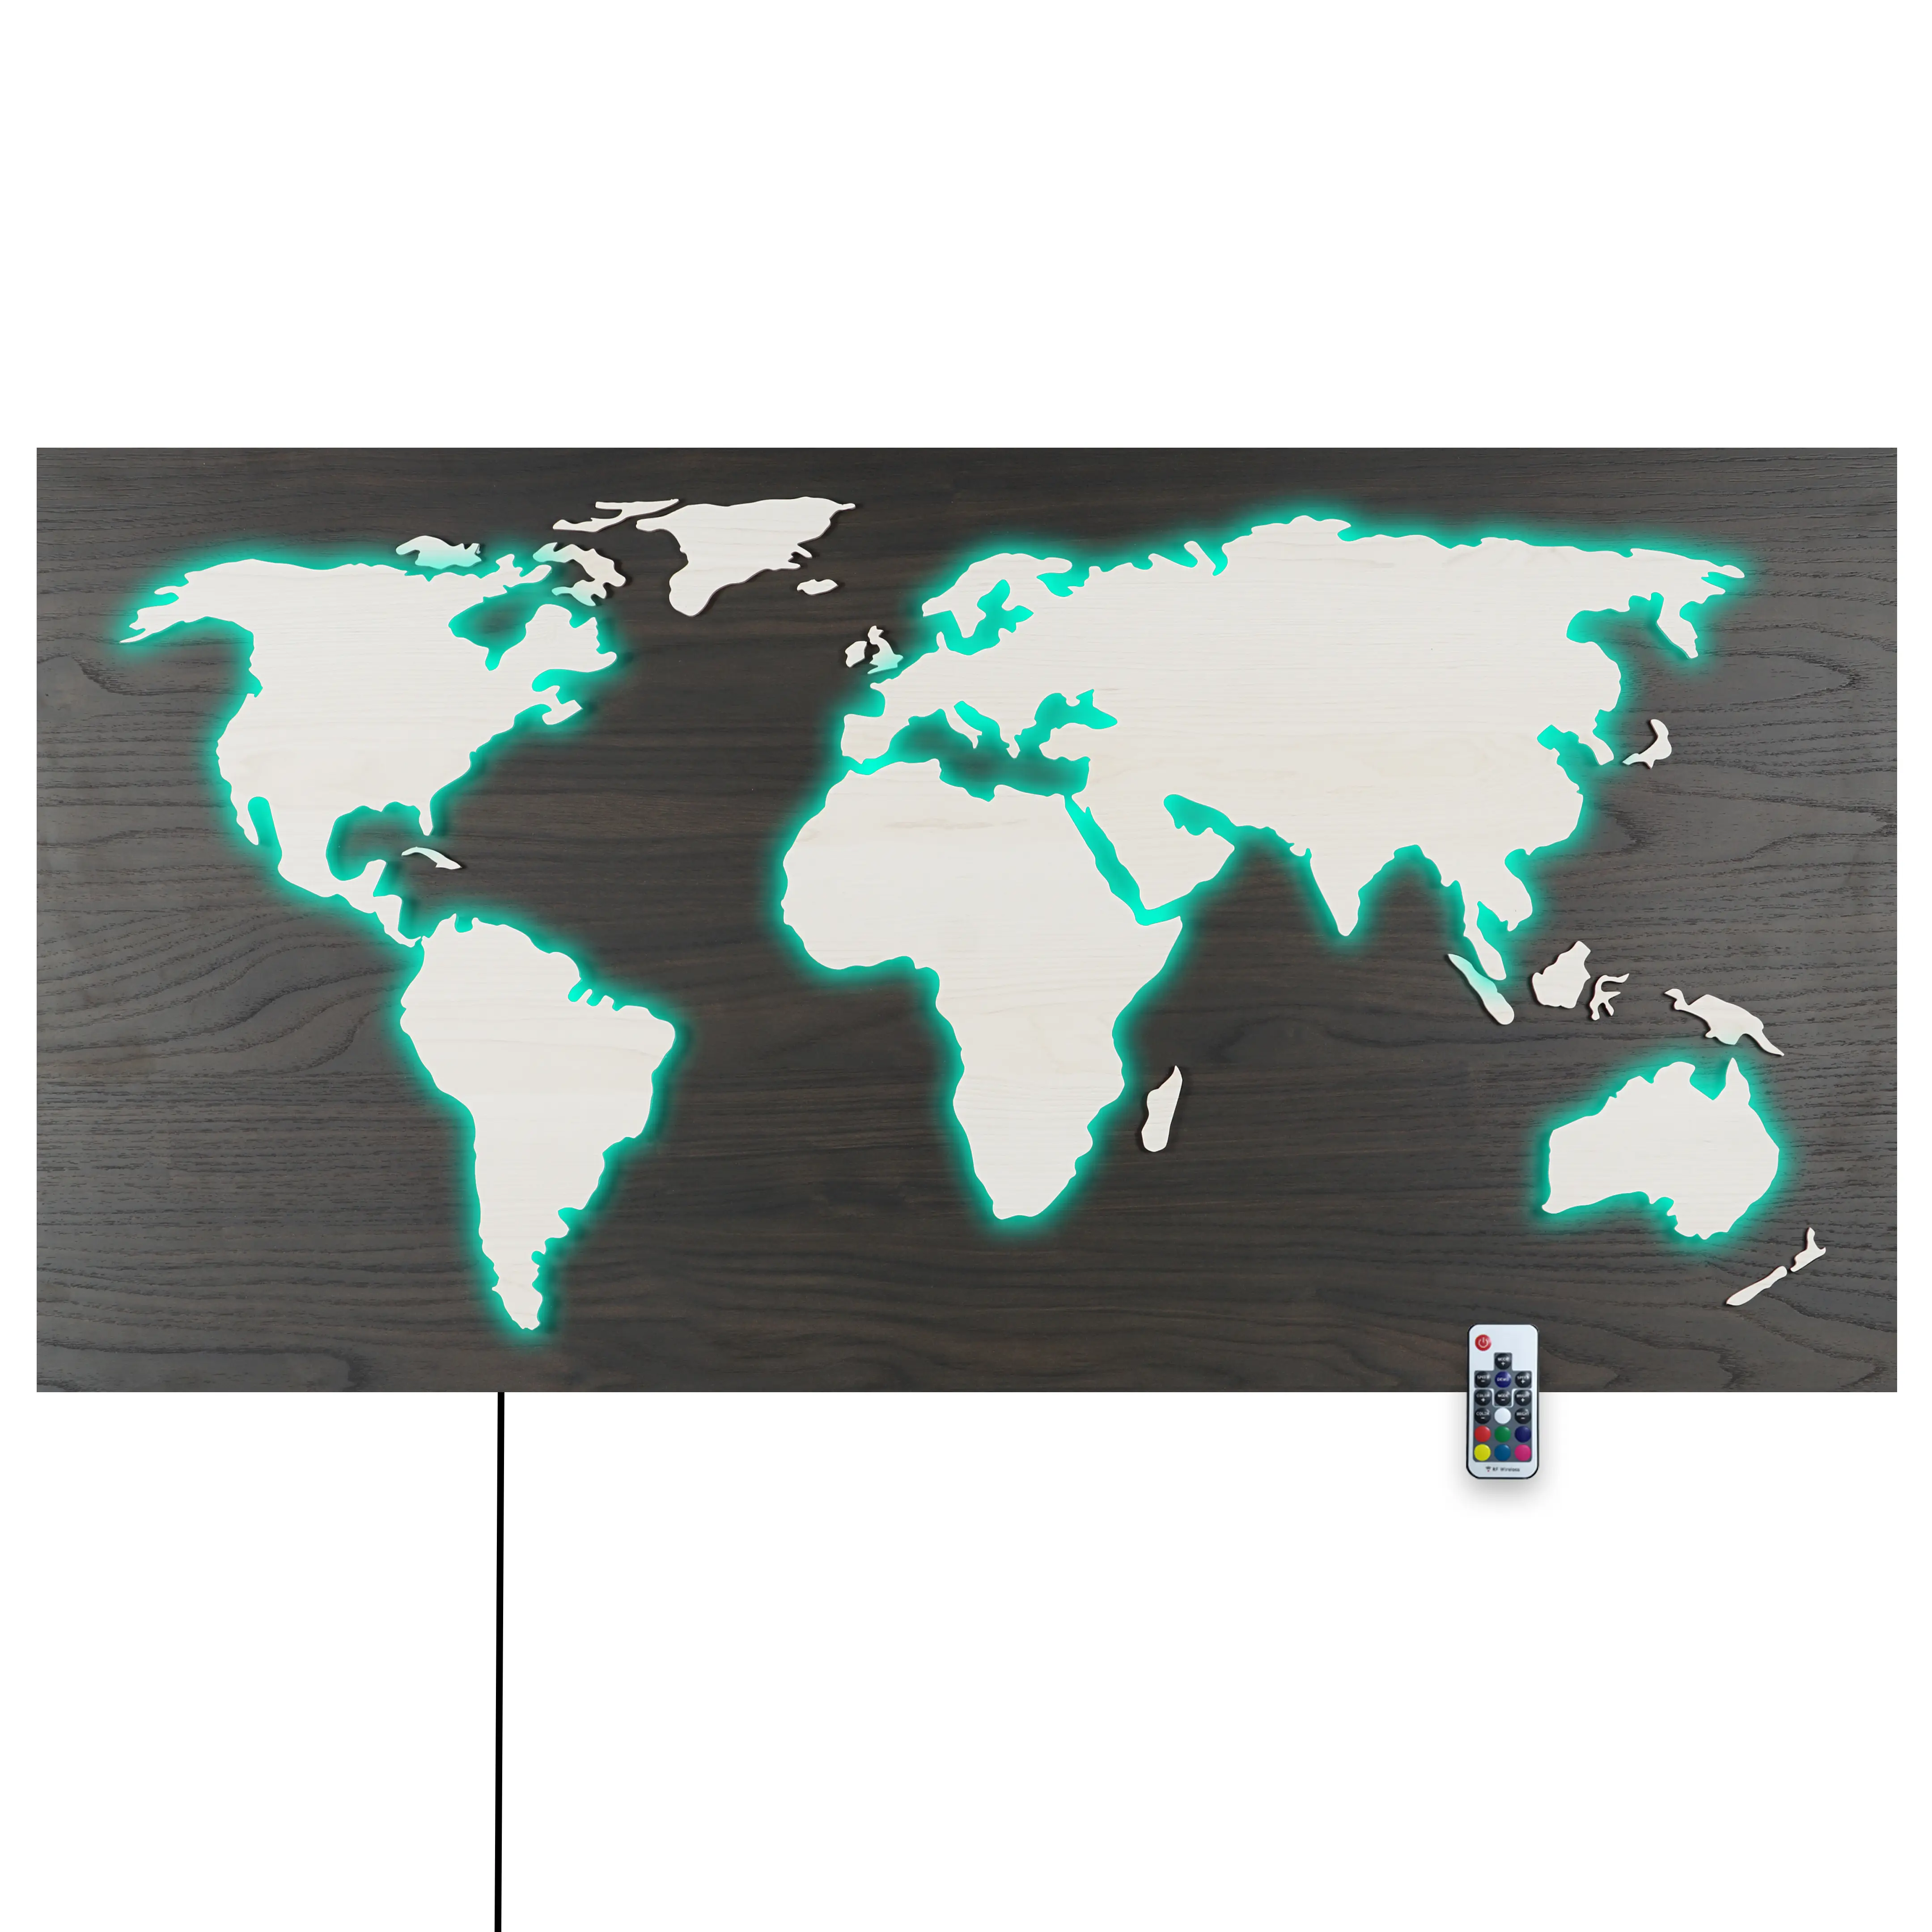 LED Holz Lux RGB world map 3D Weltkarte